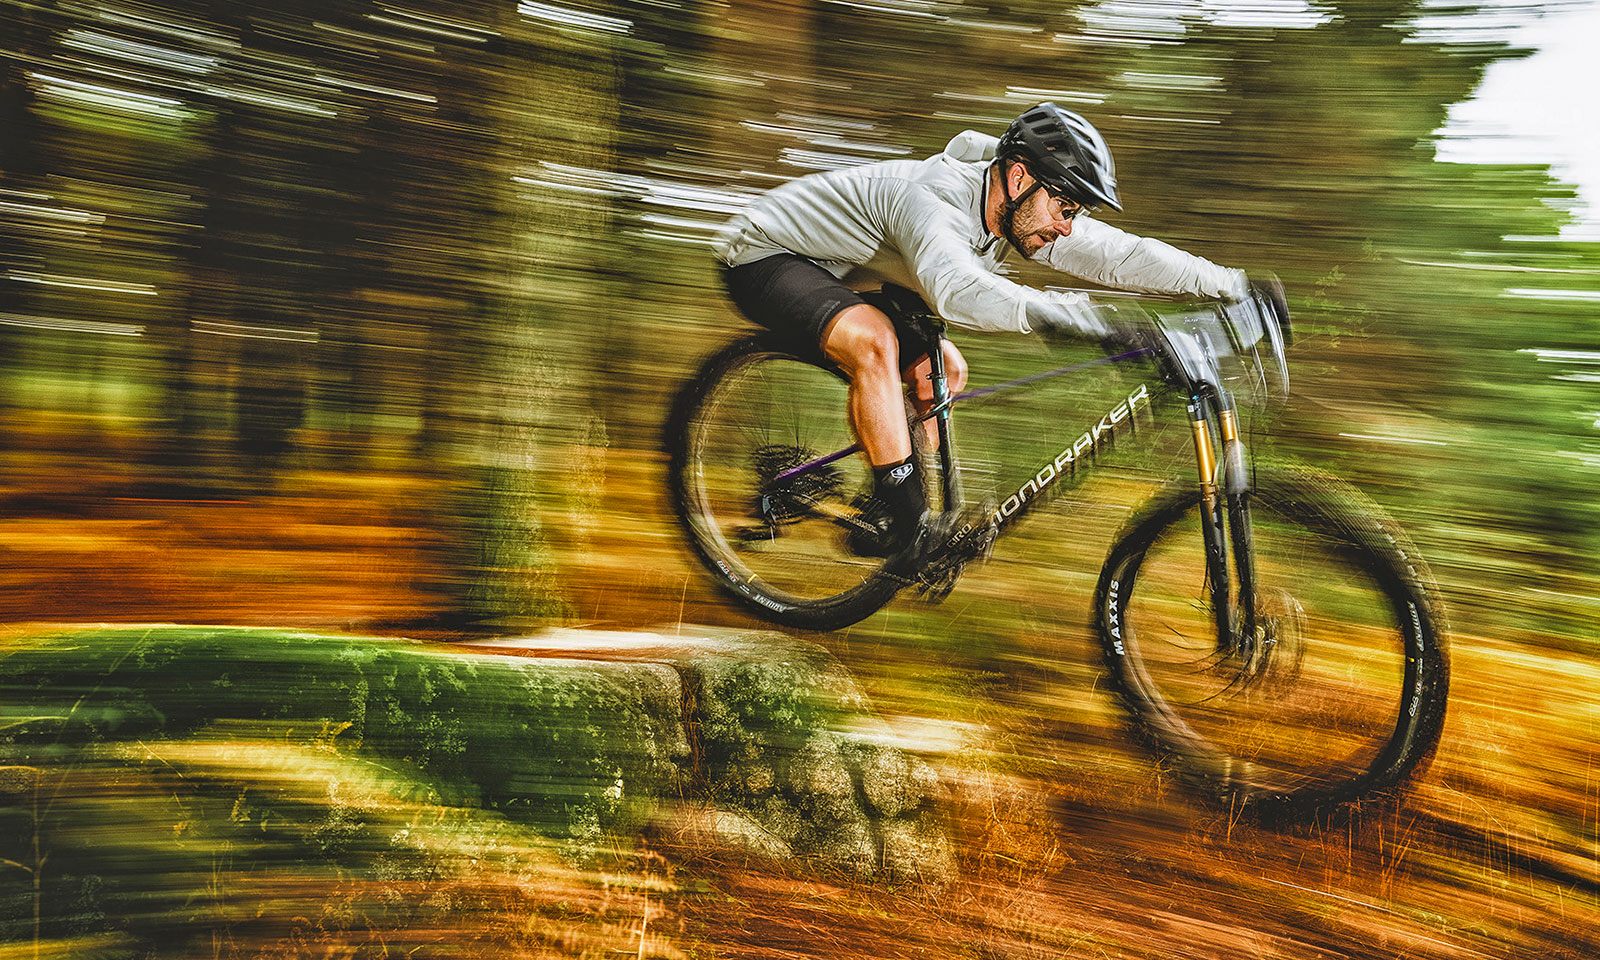 Mondraker Chrono Carbon DC progressive downcountry hardtail mountain bike, riding